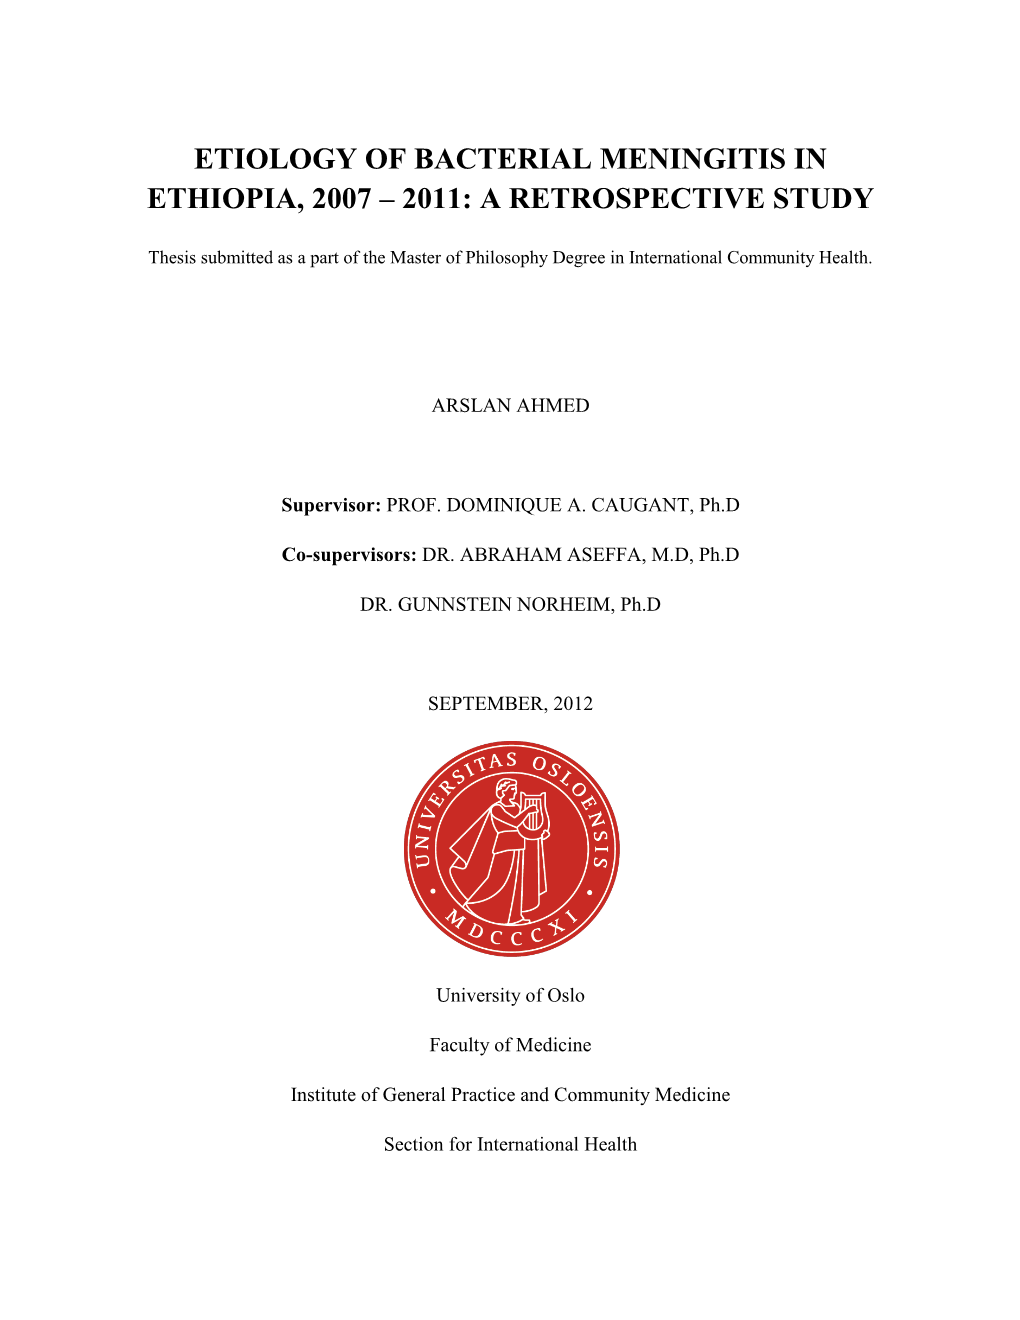 Etiology of Bacterial Meningitis in Ethiopia, 2007 – 2011: a Retrospective Study